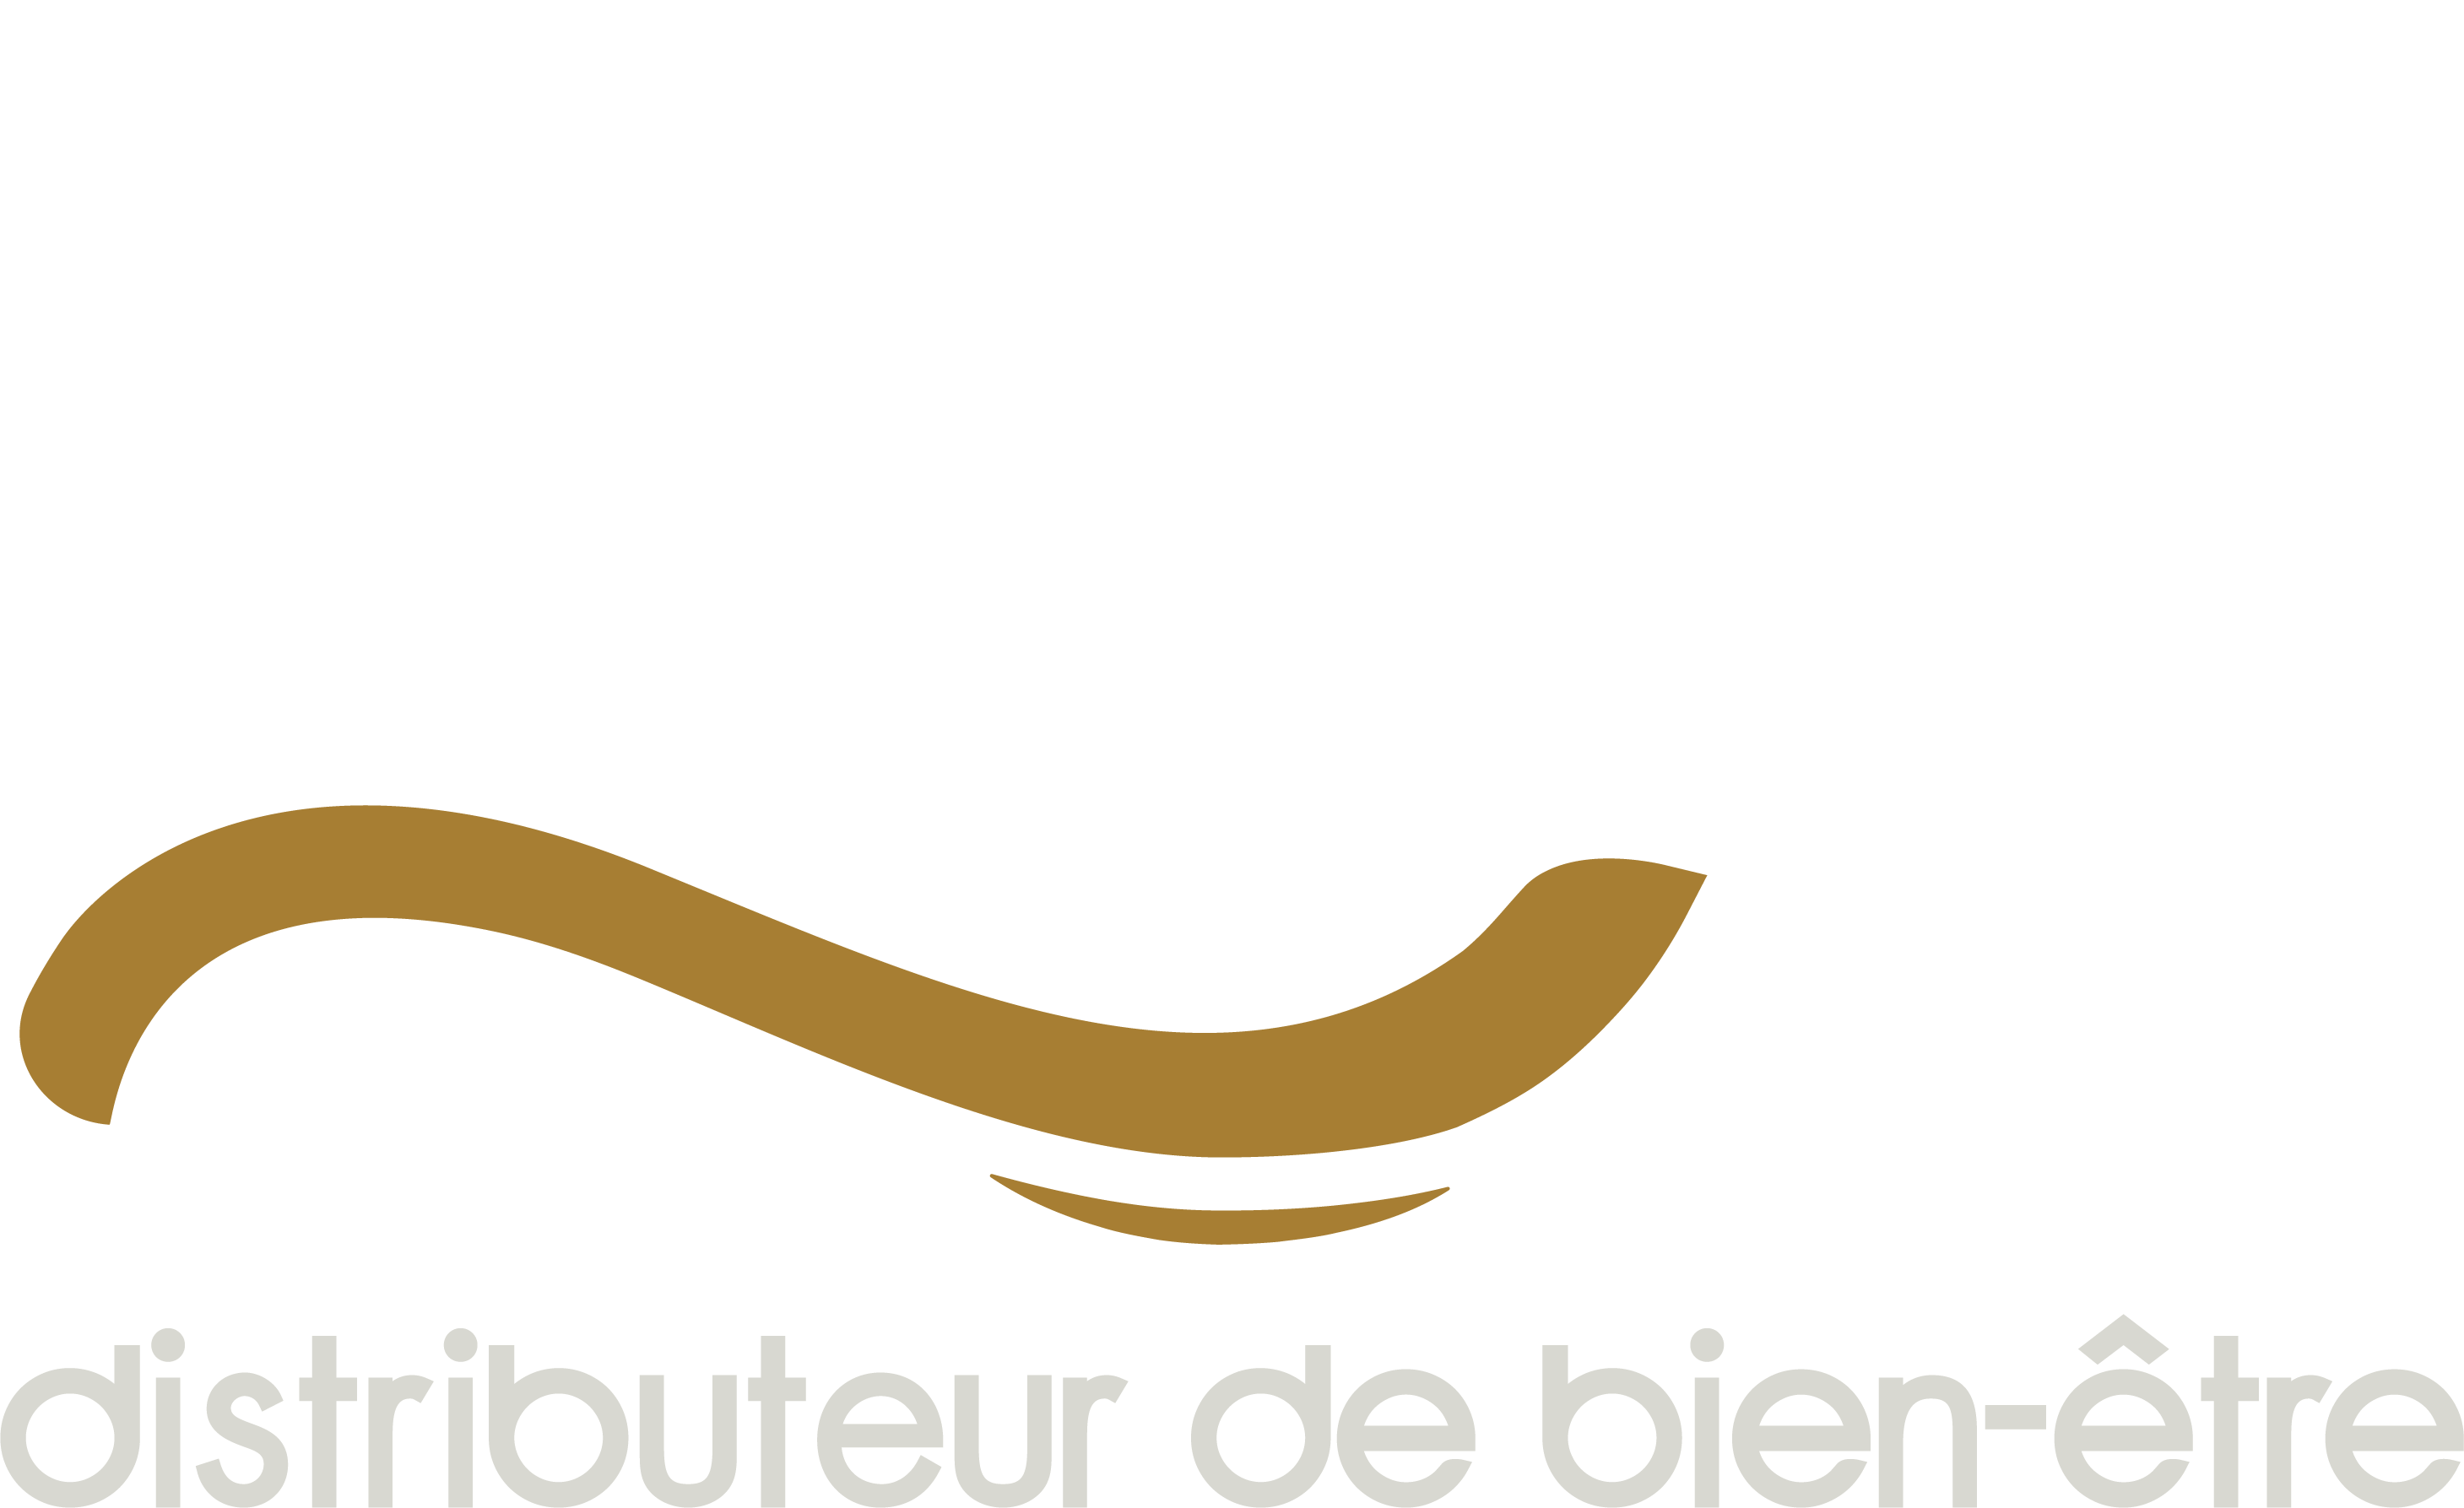 Logo DBE85 02